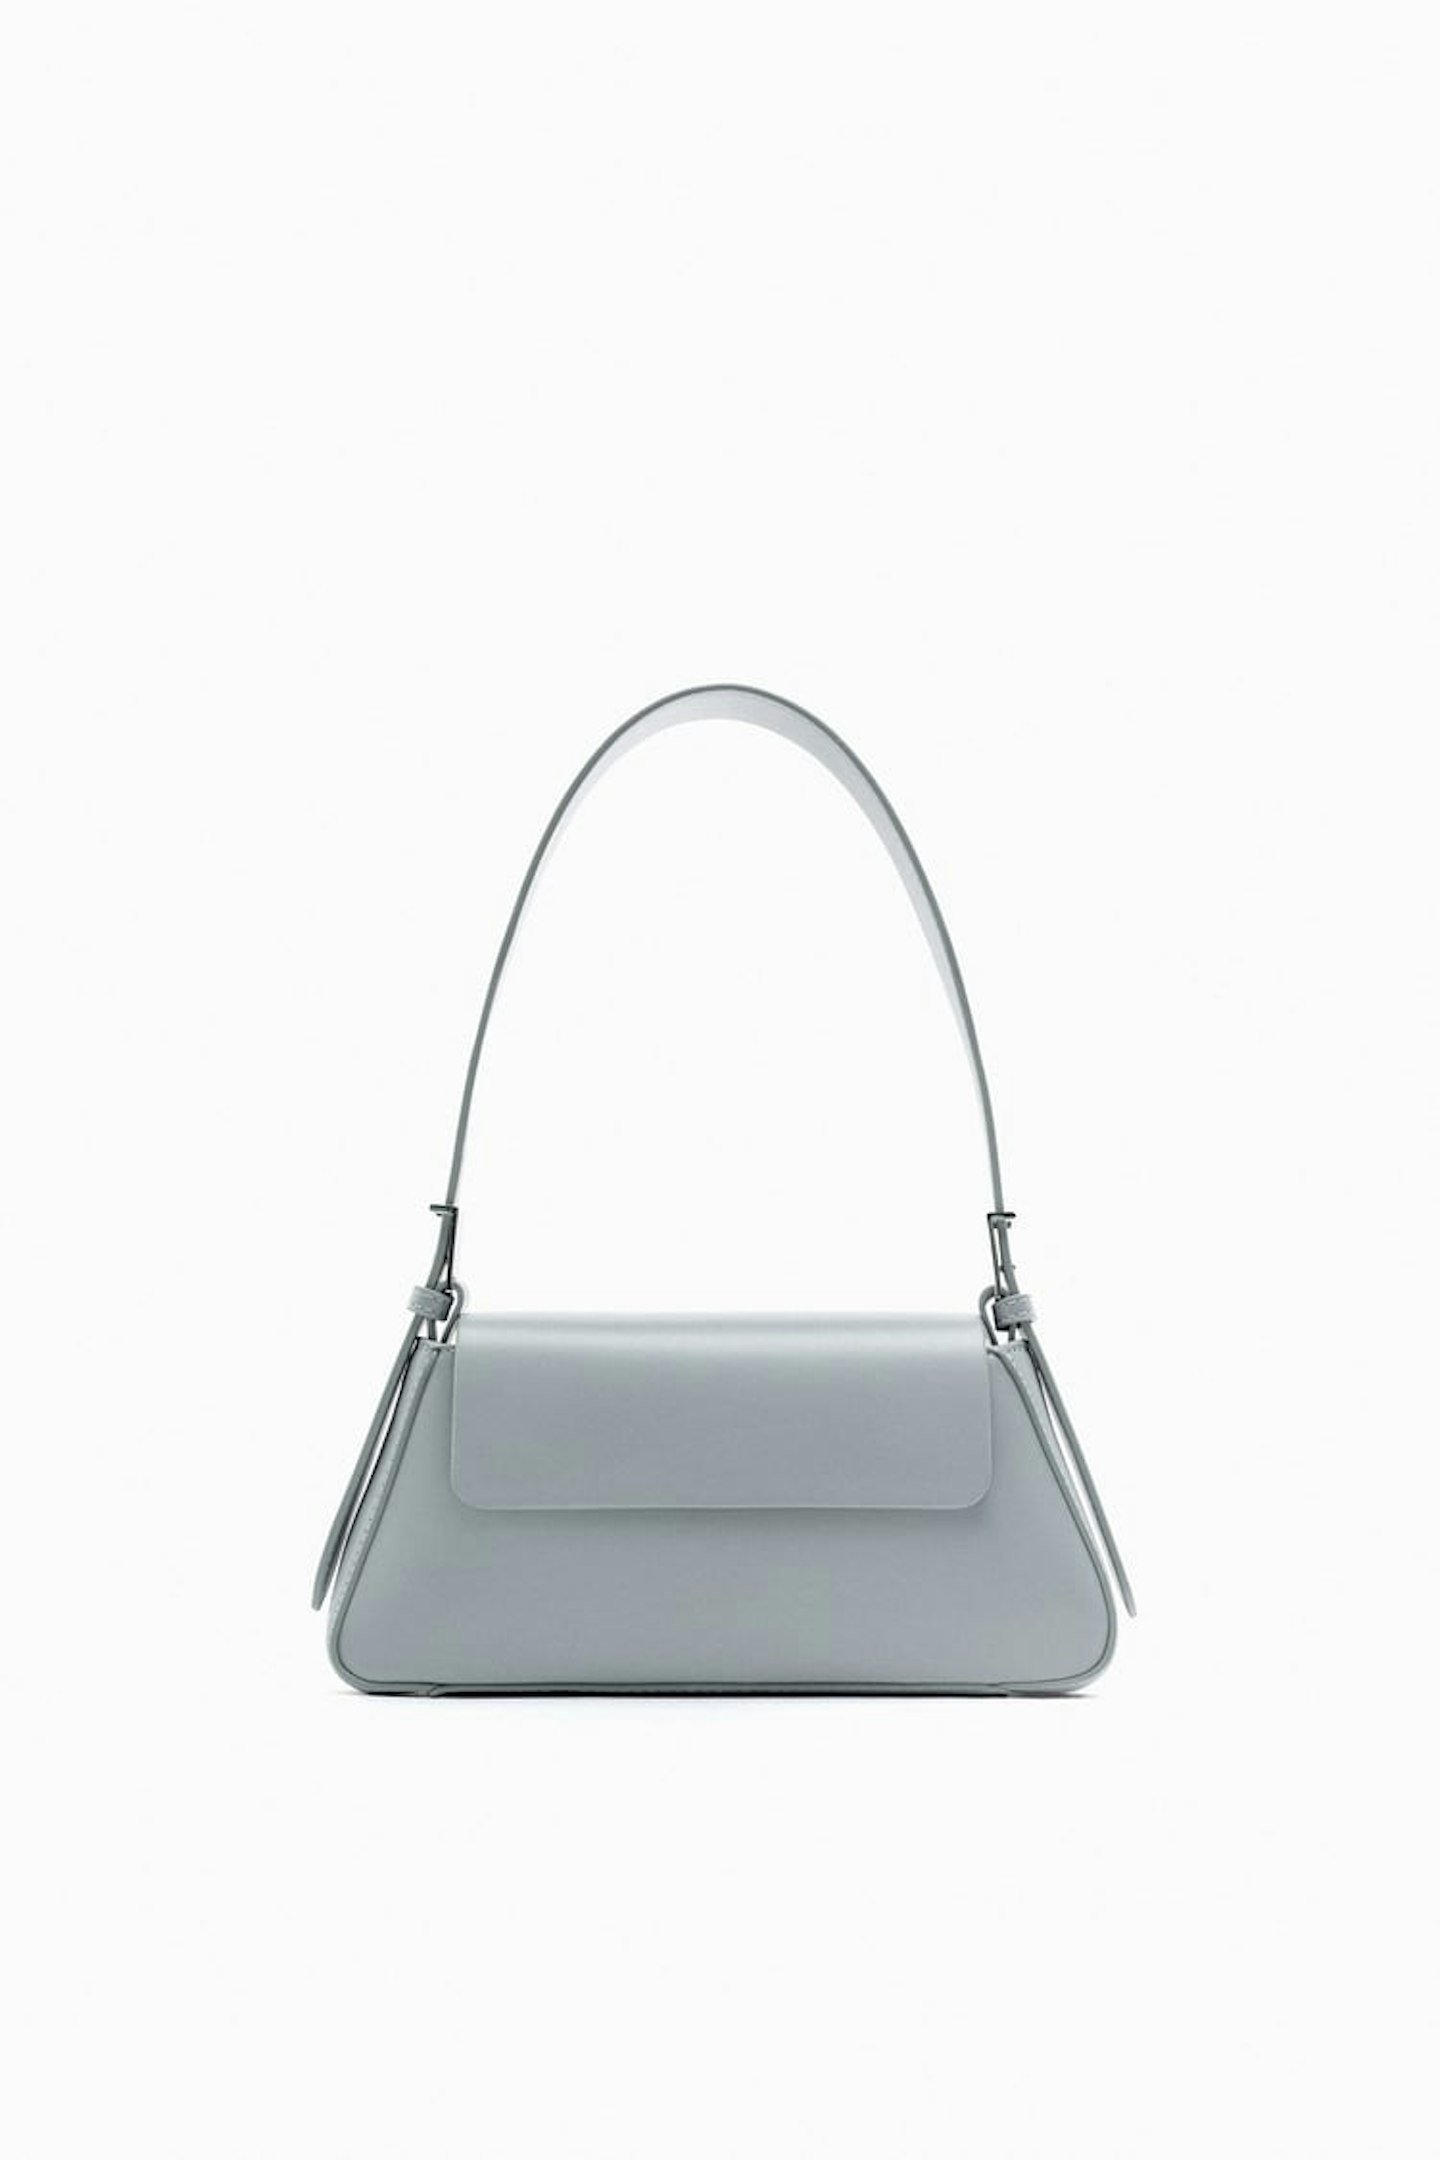 Zara Minimalist Shoulder Bag